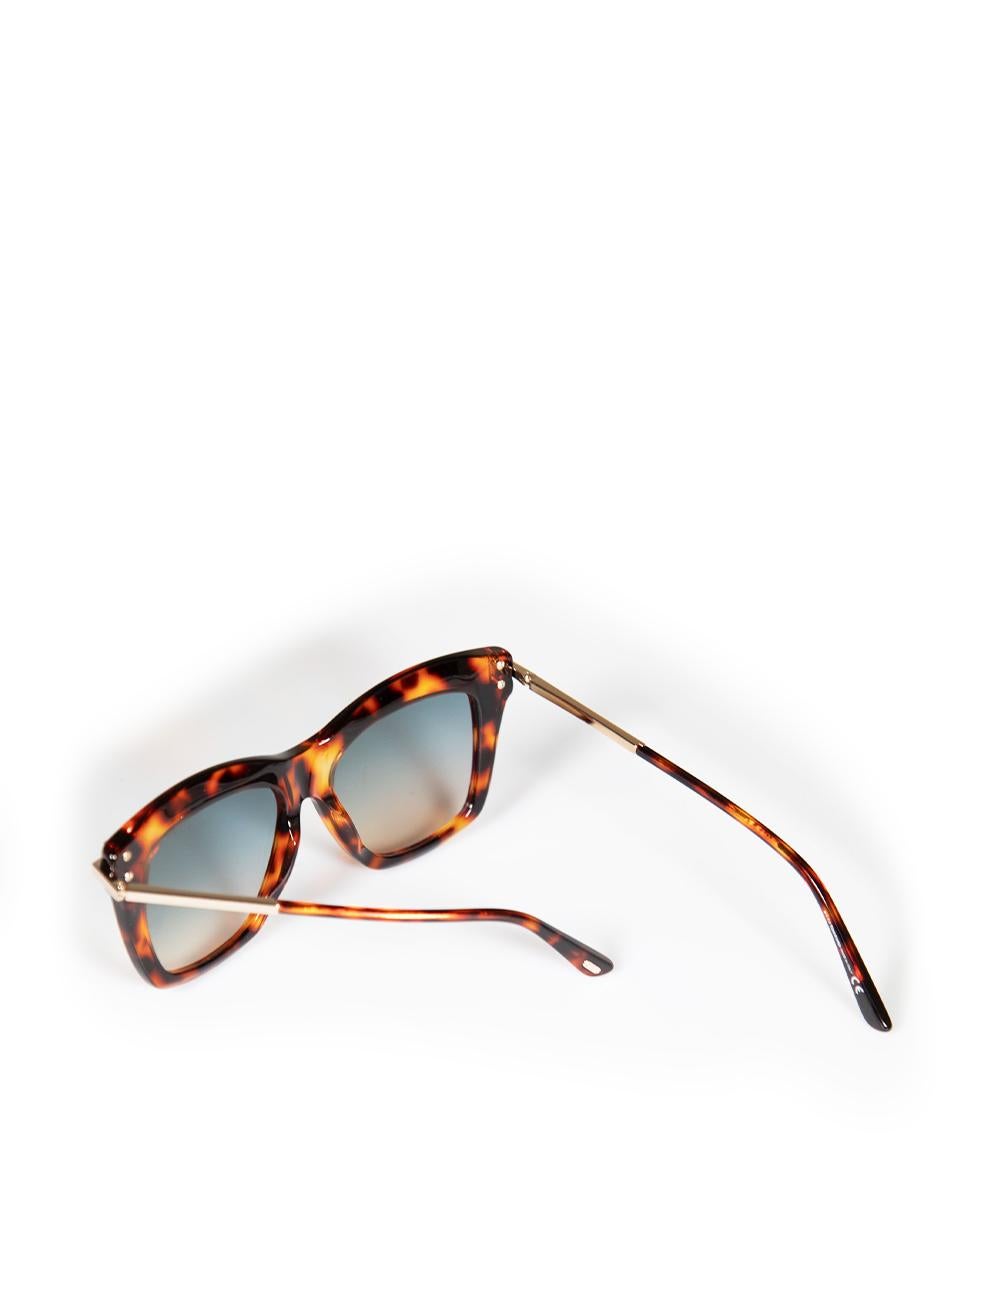 Tom Ford Coloured Havana Tortoiseshell Dasha Sunglasses For Sale 3